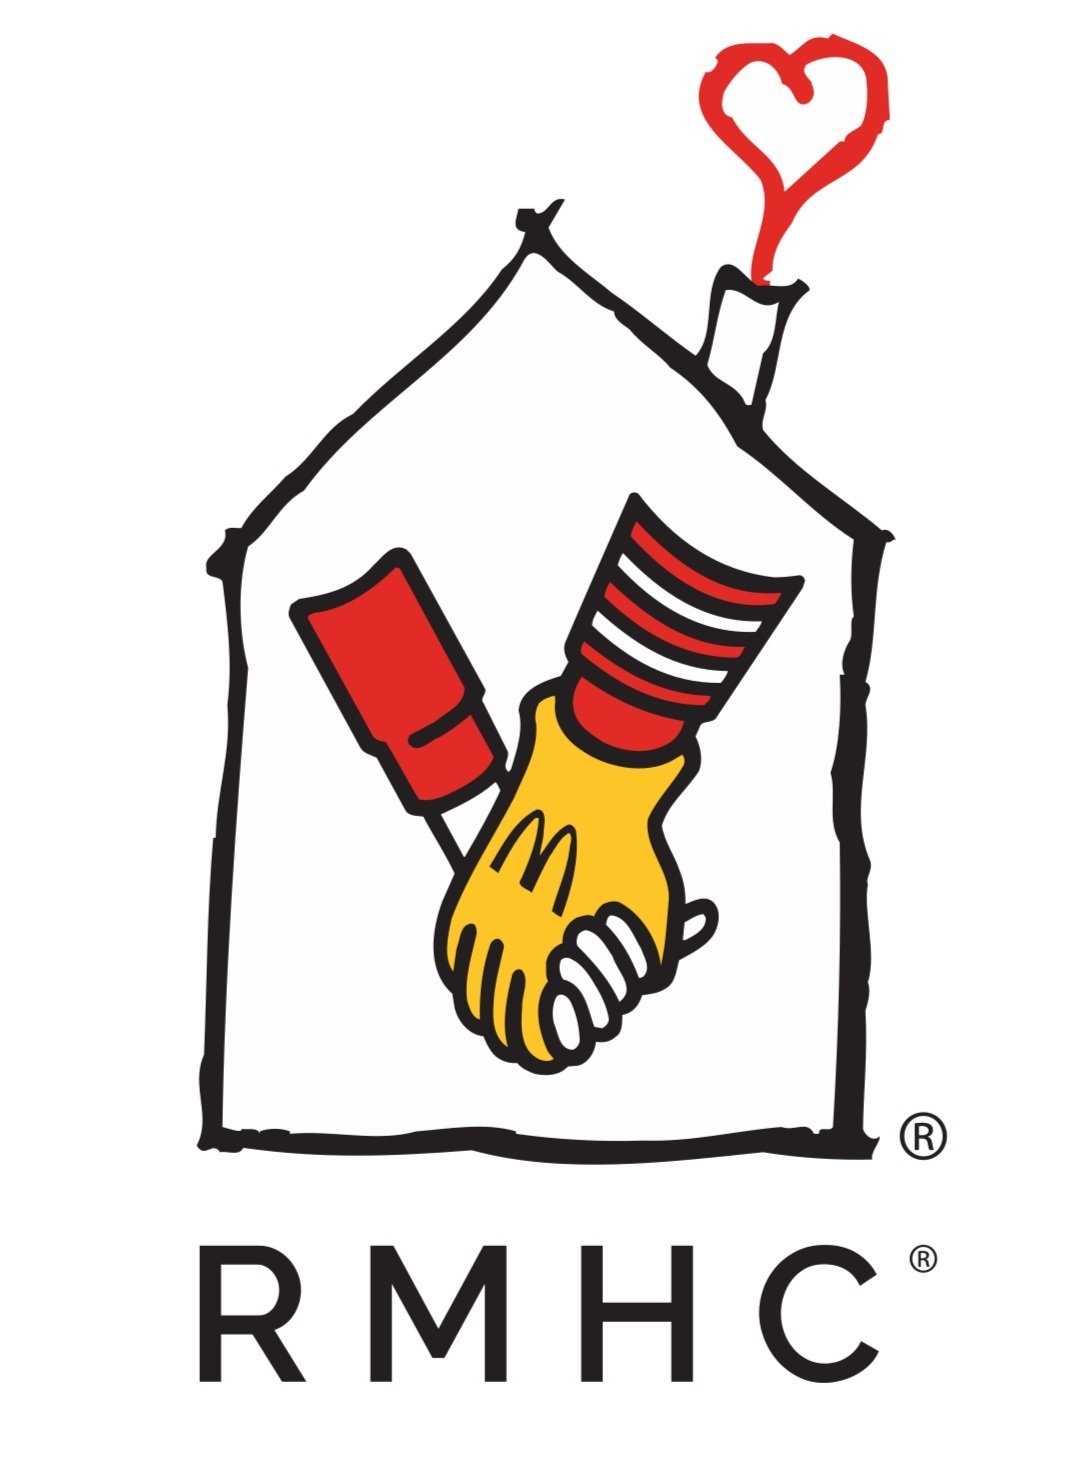 Ronald+Mc+logo.jpg